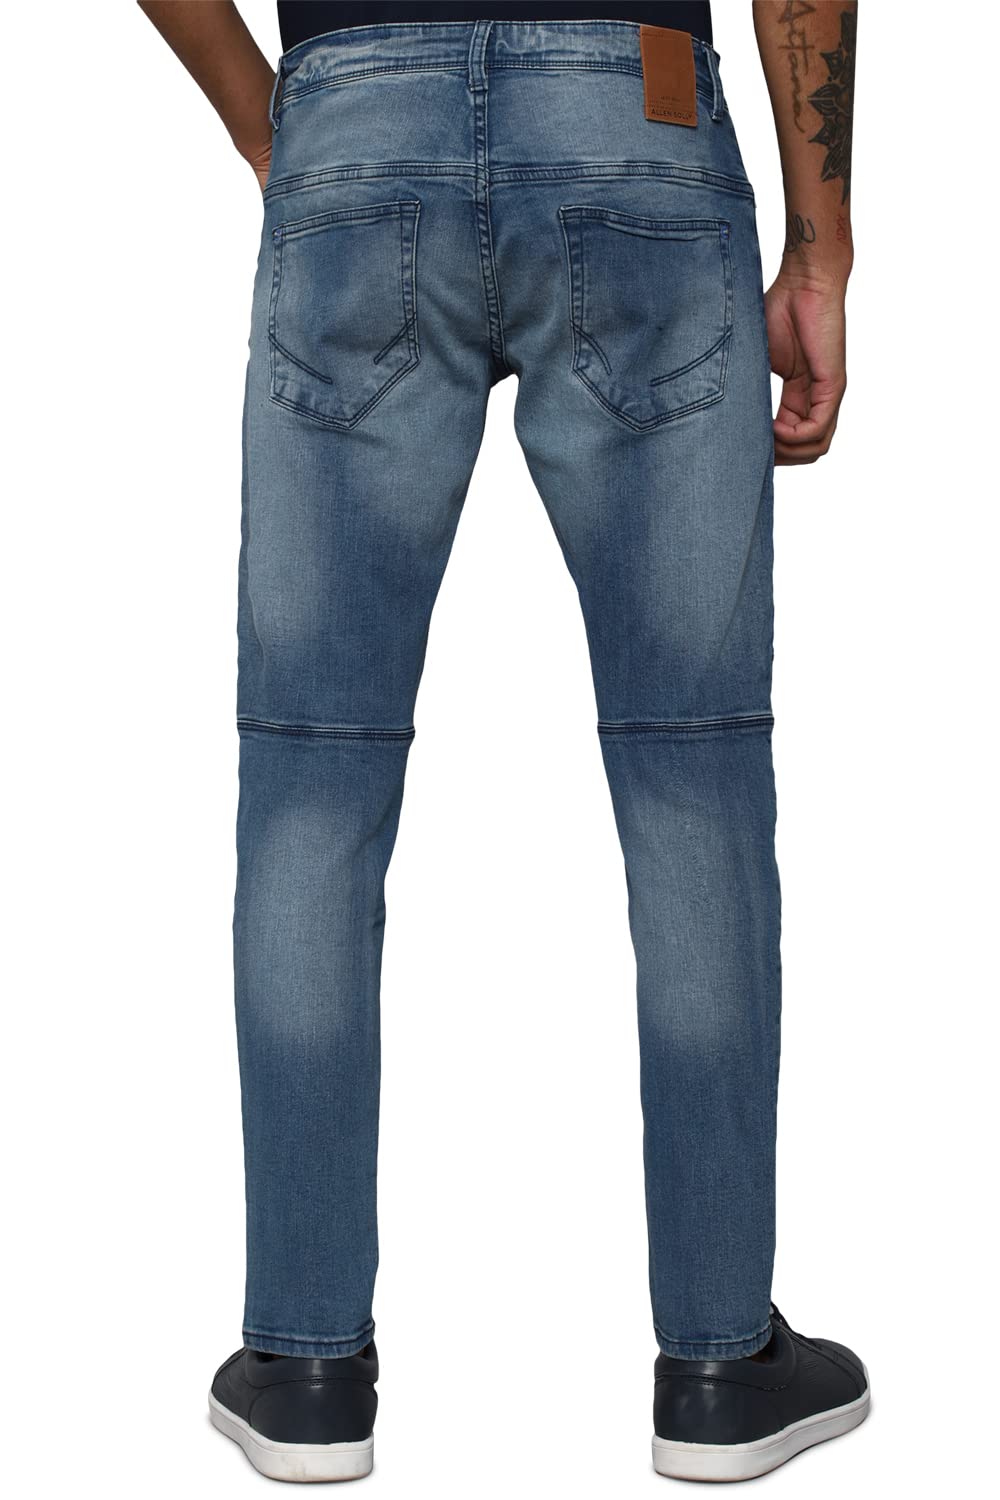 Allen Solly Men's Regular Jeans (ALDNVCTFJ92296_Blue 